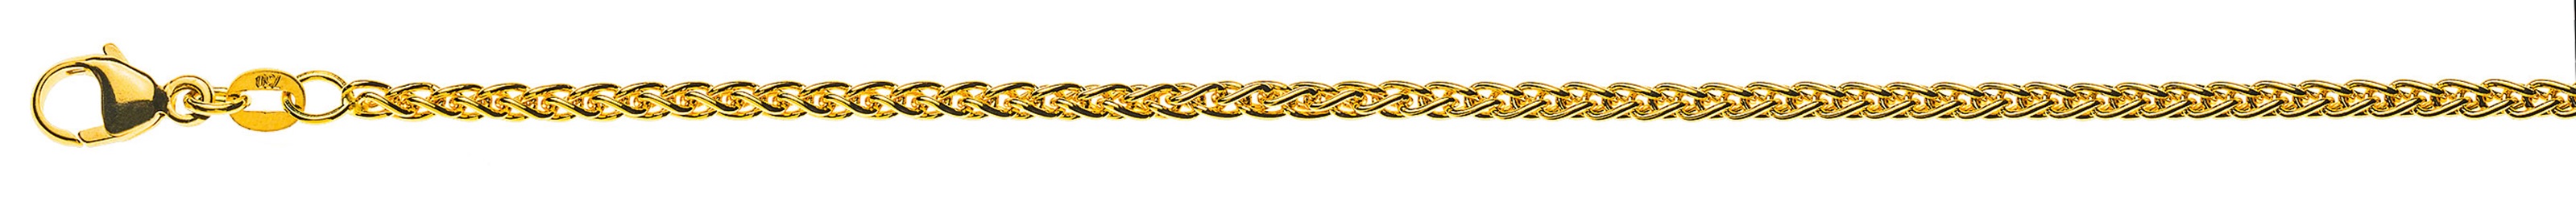 AURONOS Prestige Necklace yellow gold 18K cable chain 60cm 2.5mm